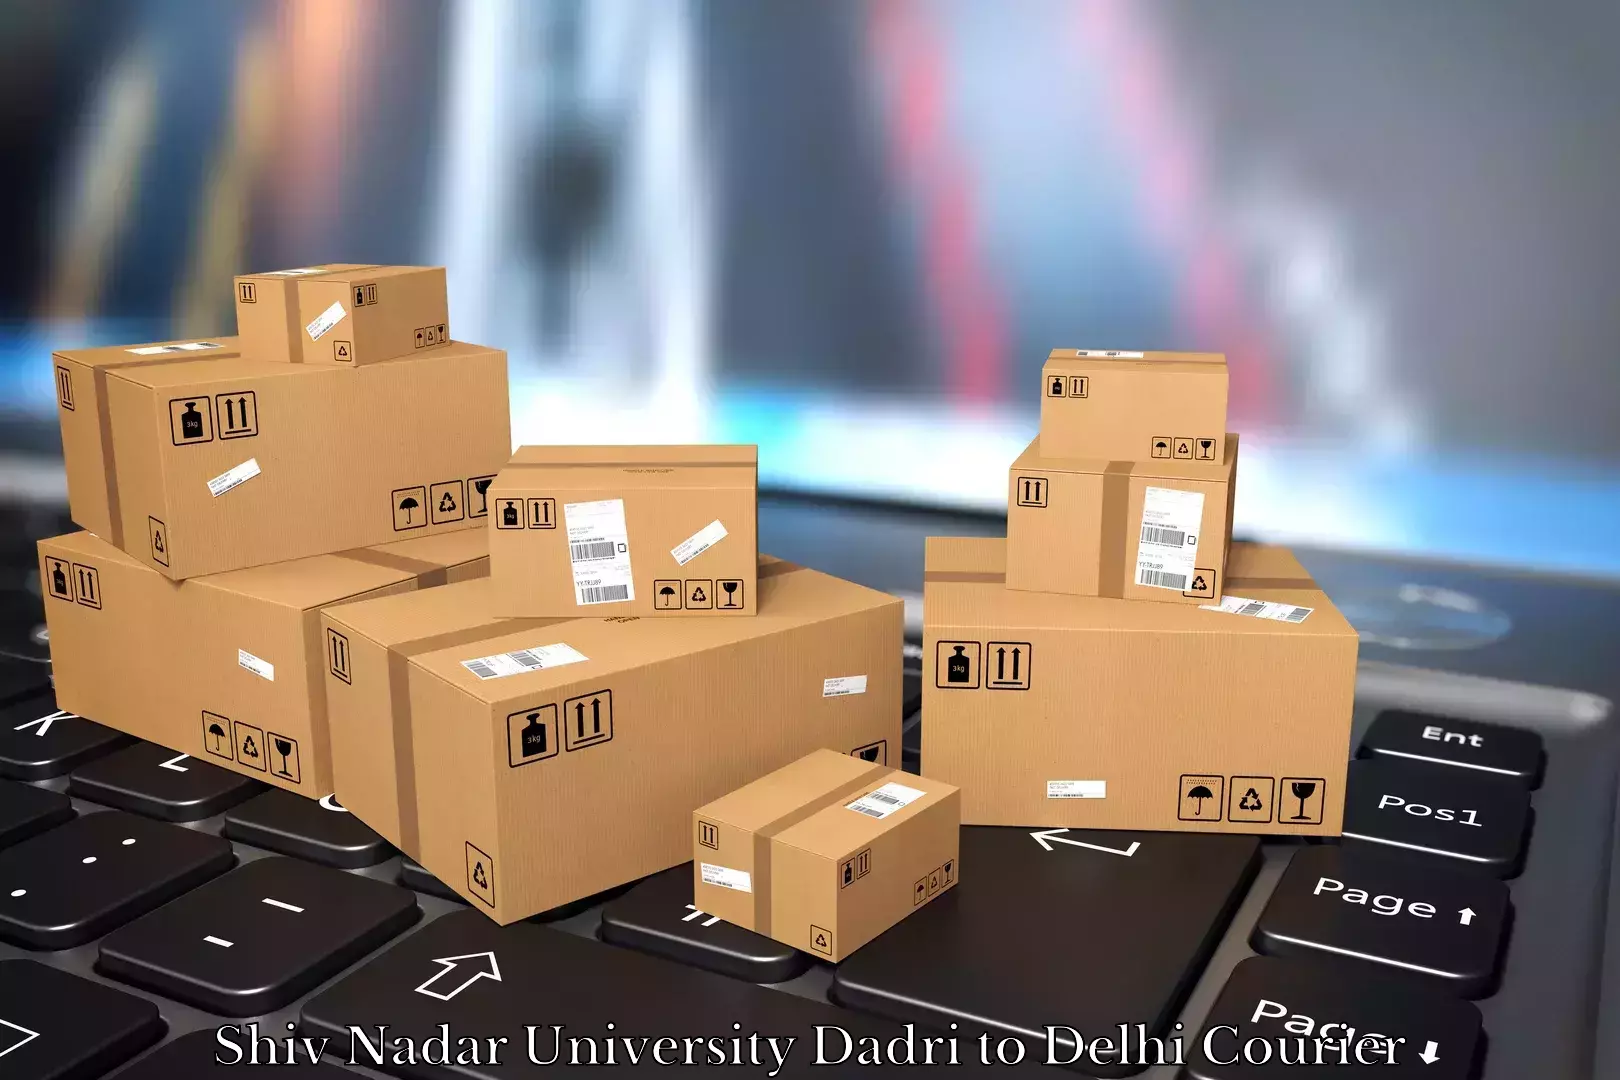 Moving and packing experts Shiv Nadar University Dadri to Sarojini Nagar